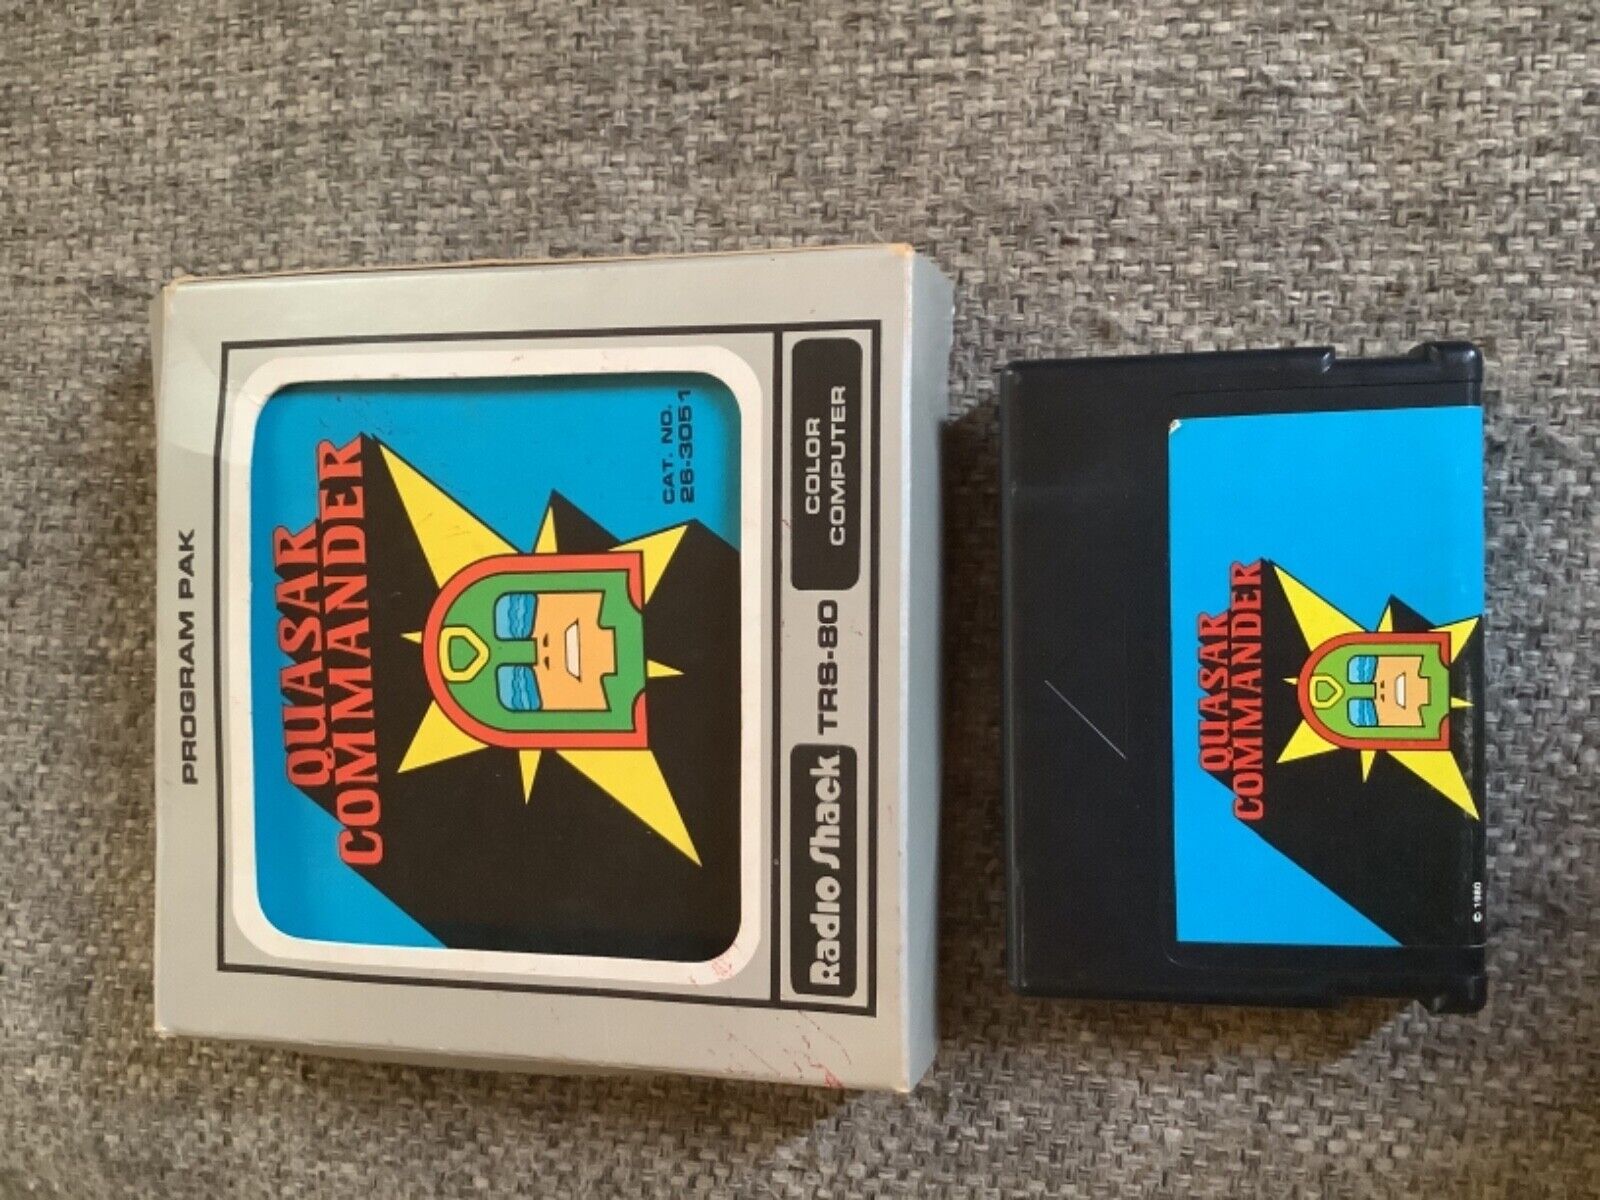 Quasar Commander Radio Shack TRS-80 Tandy Color Video Game Complete 80s Retro